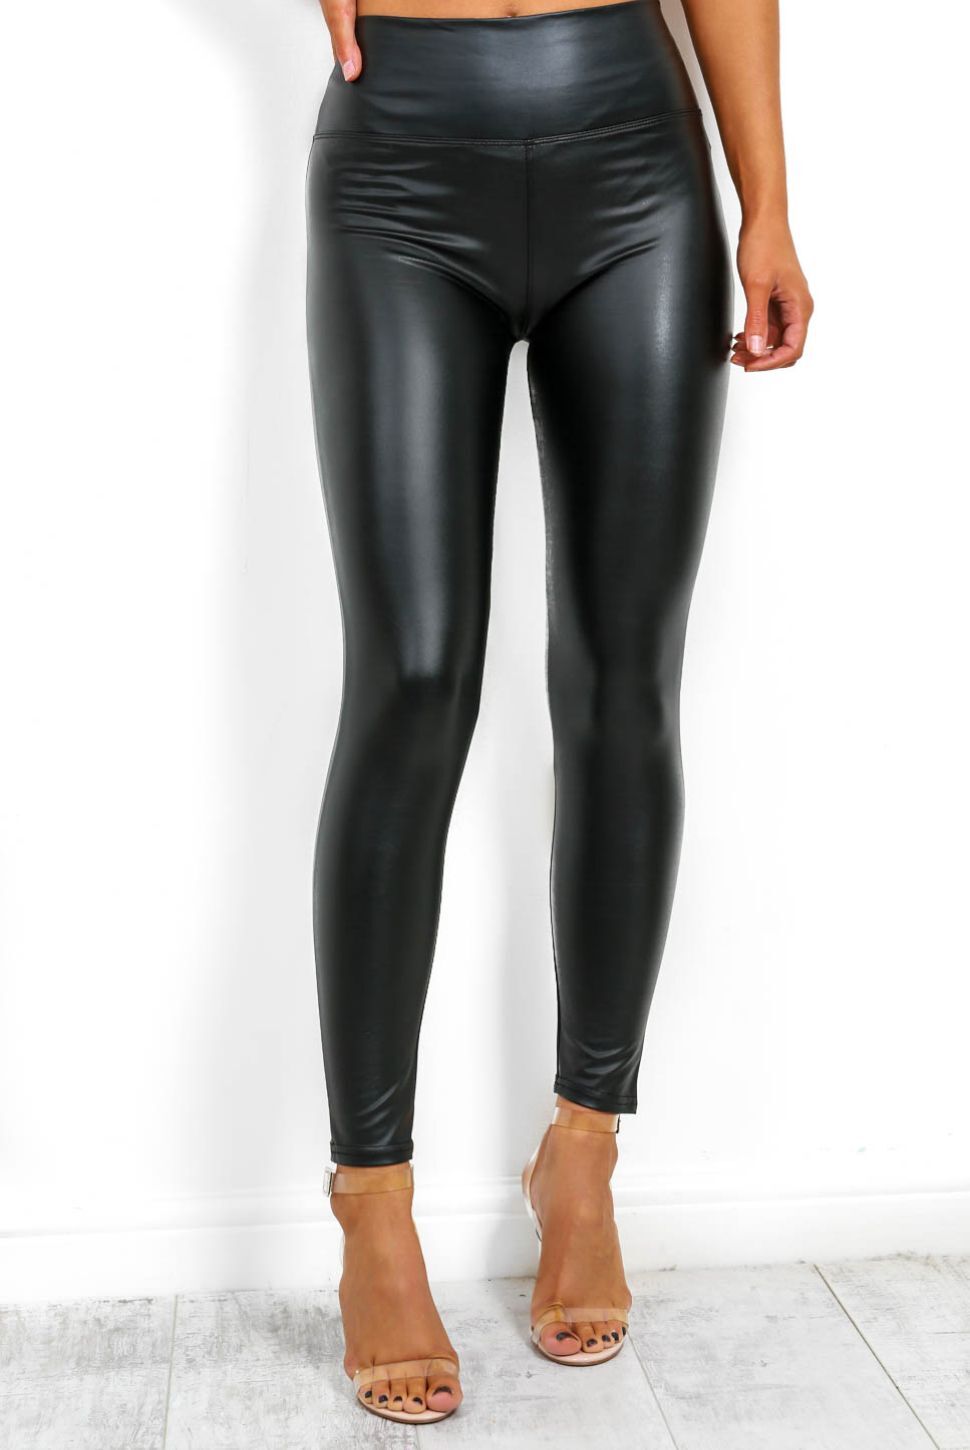 Freya Leather Look Legging In Black – The Walk in Wardrobe